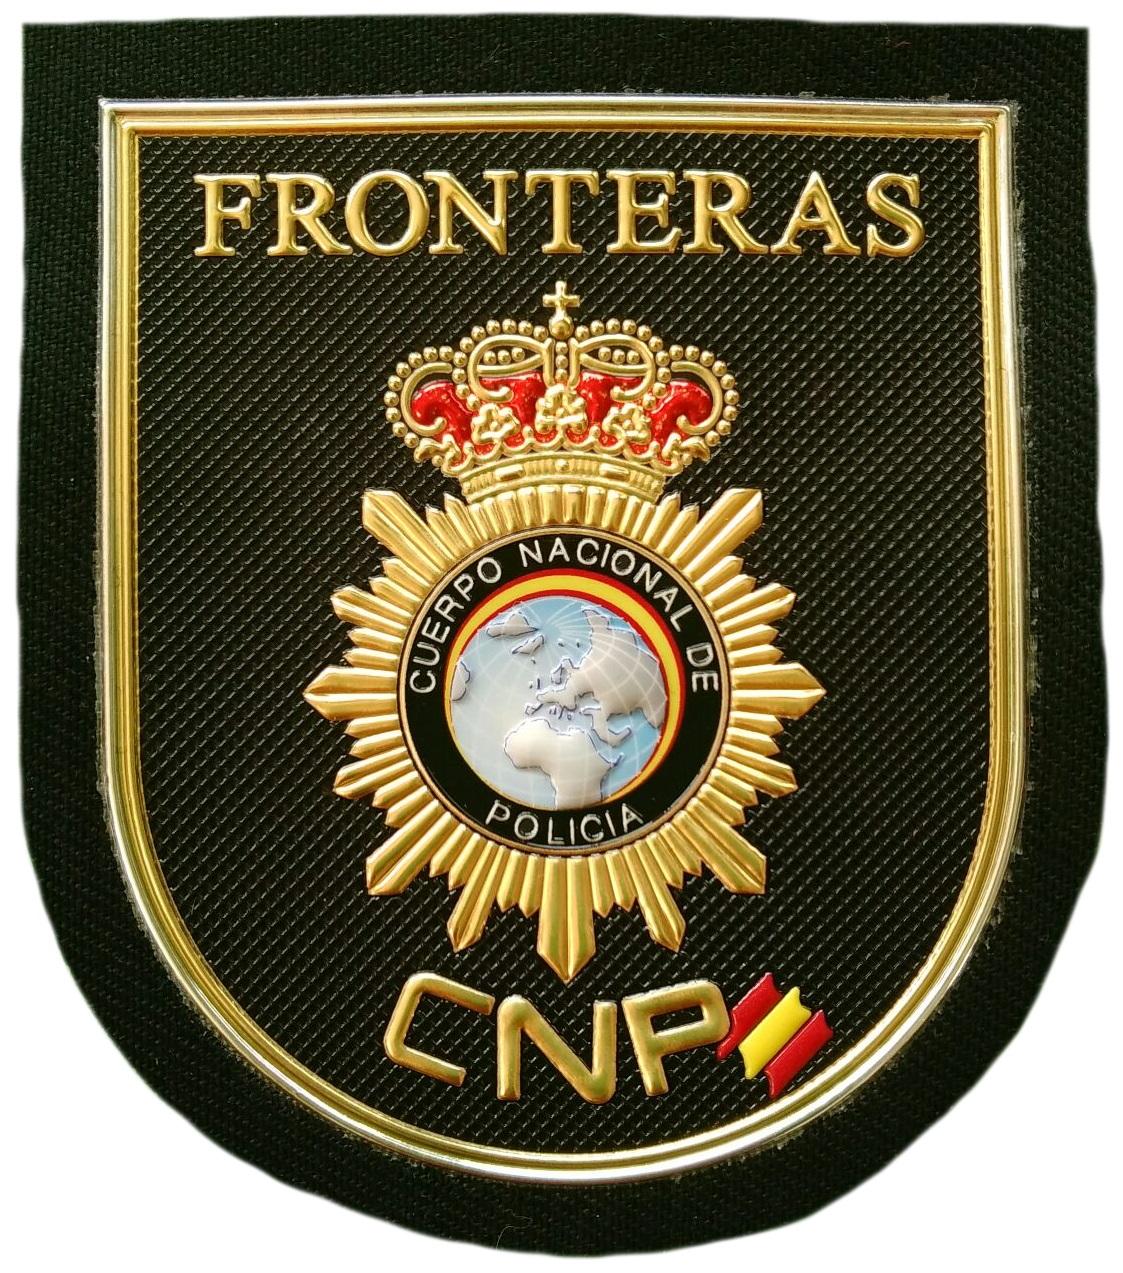 Policía Nacional Cnp Fronteras Parche Insignia Emblema Distintivo 795